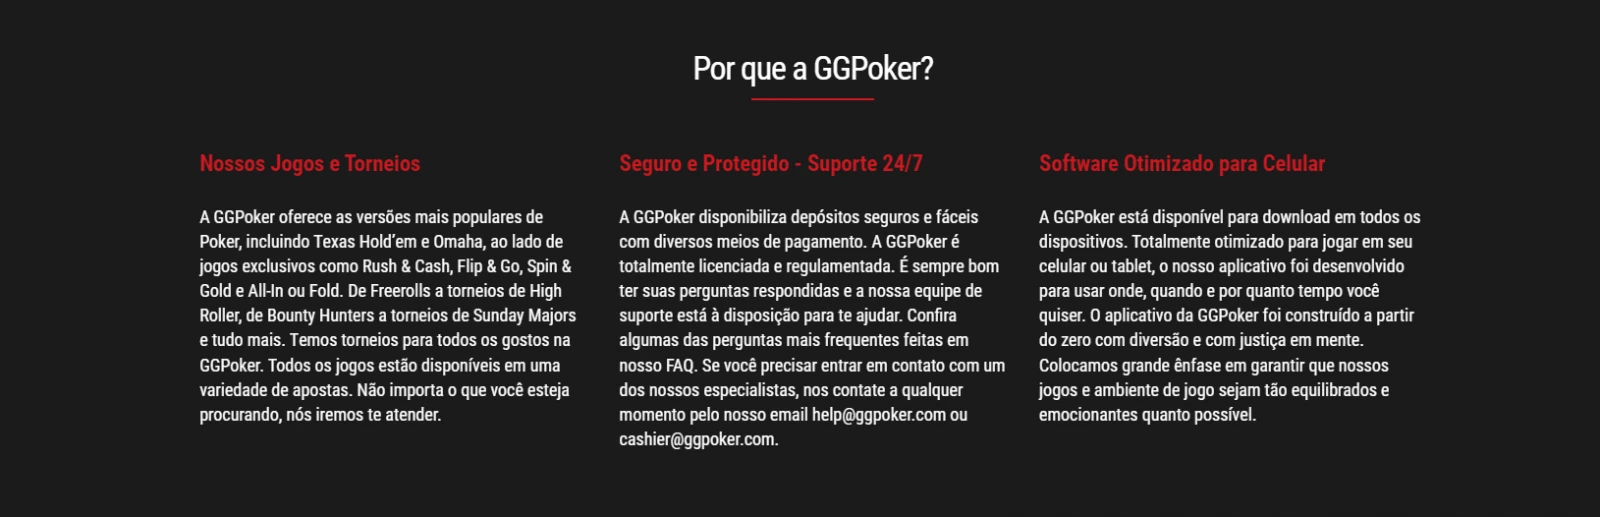 GG Poker Site